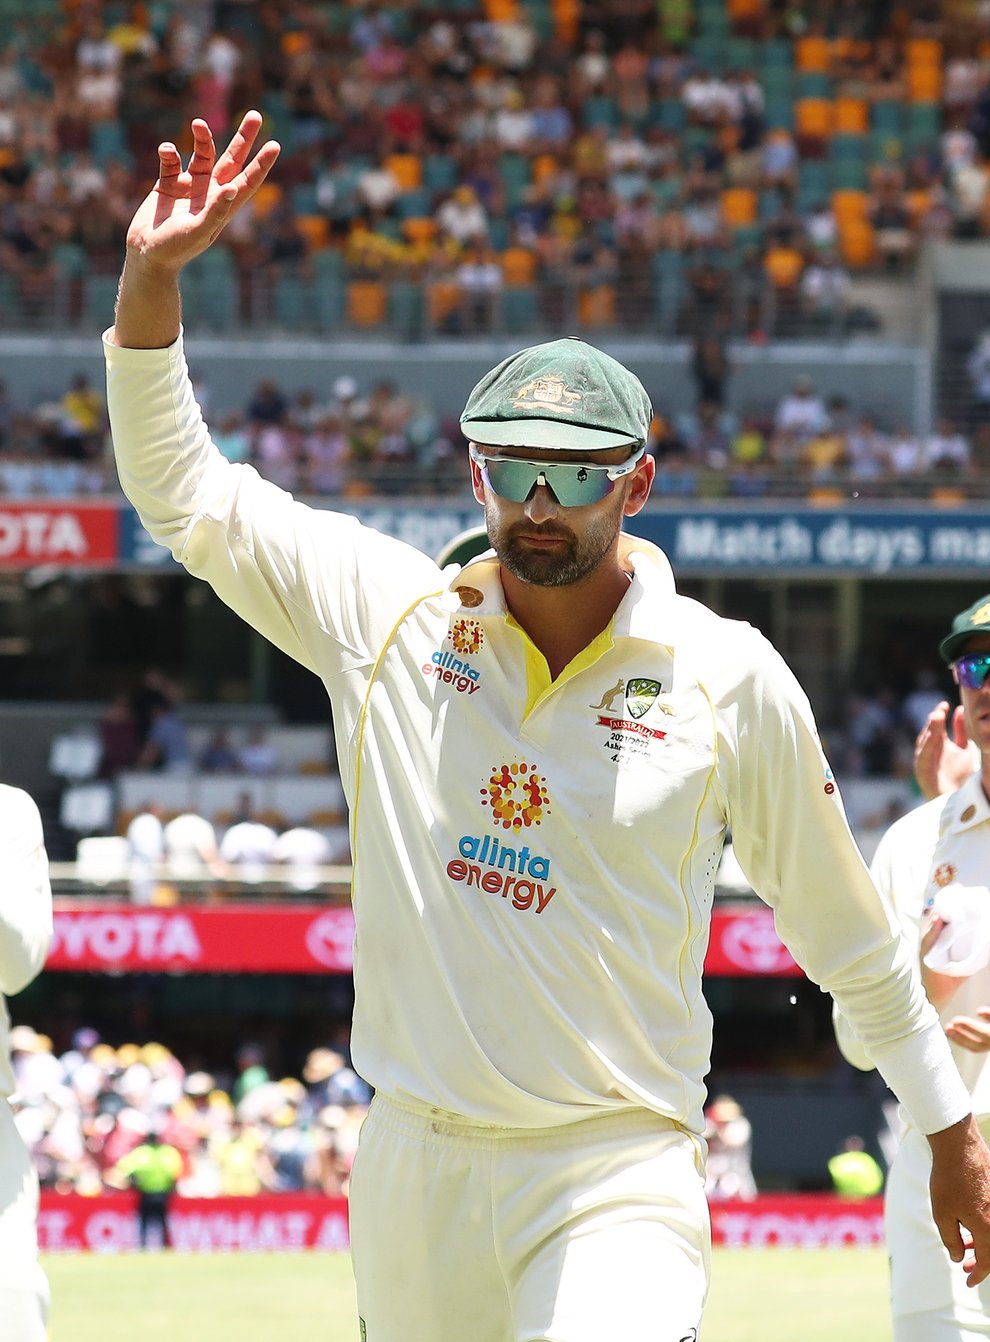 Australia tore through England to win the first Ashes Test (Jason O’Brien/PA)